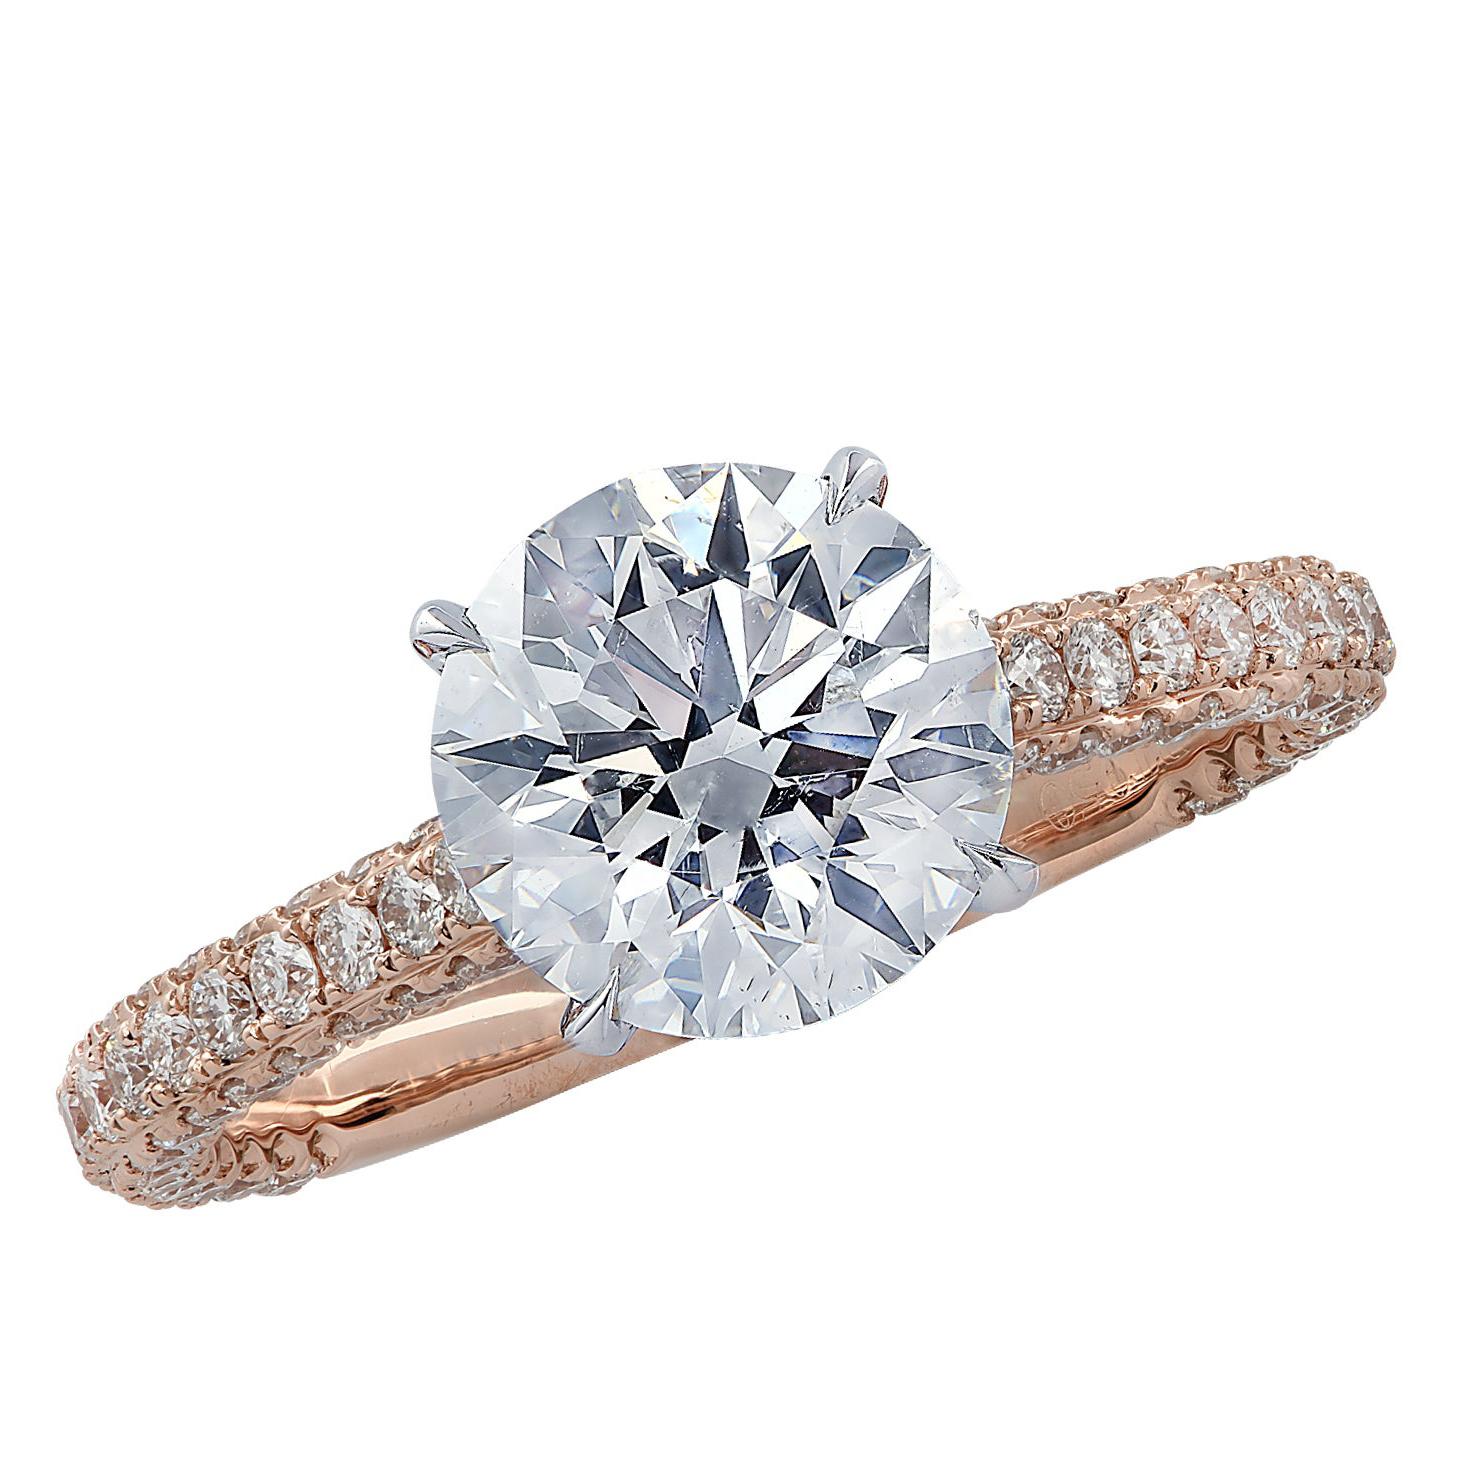 Vivid Diamonds GIA Certified 2.09 Carat Diamond Engagement Ring